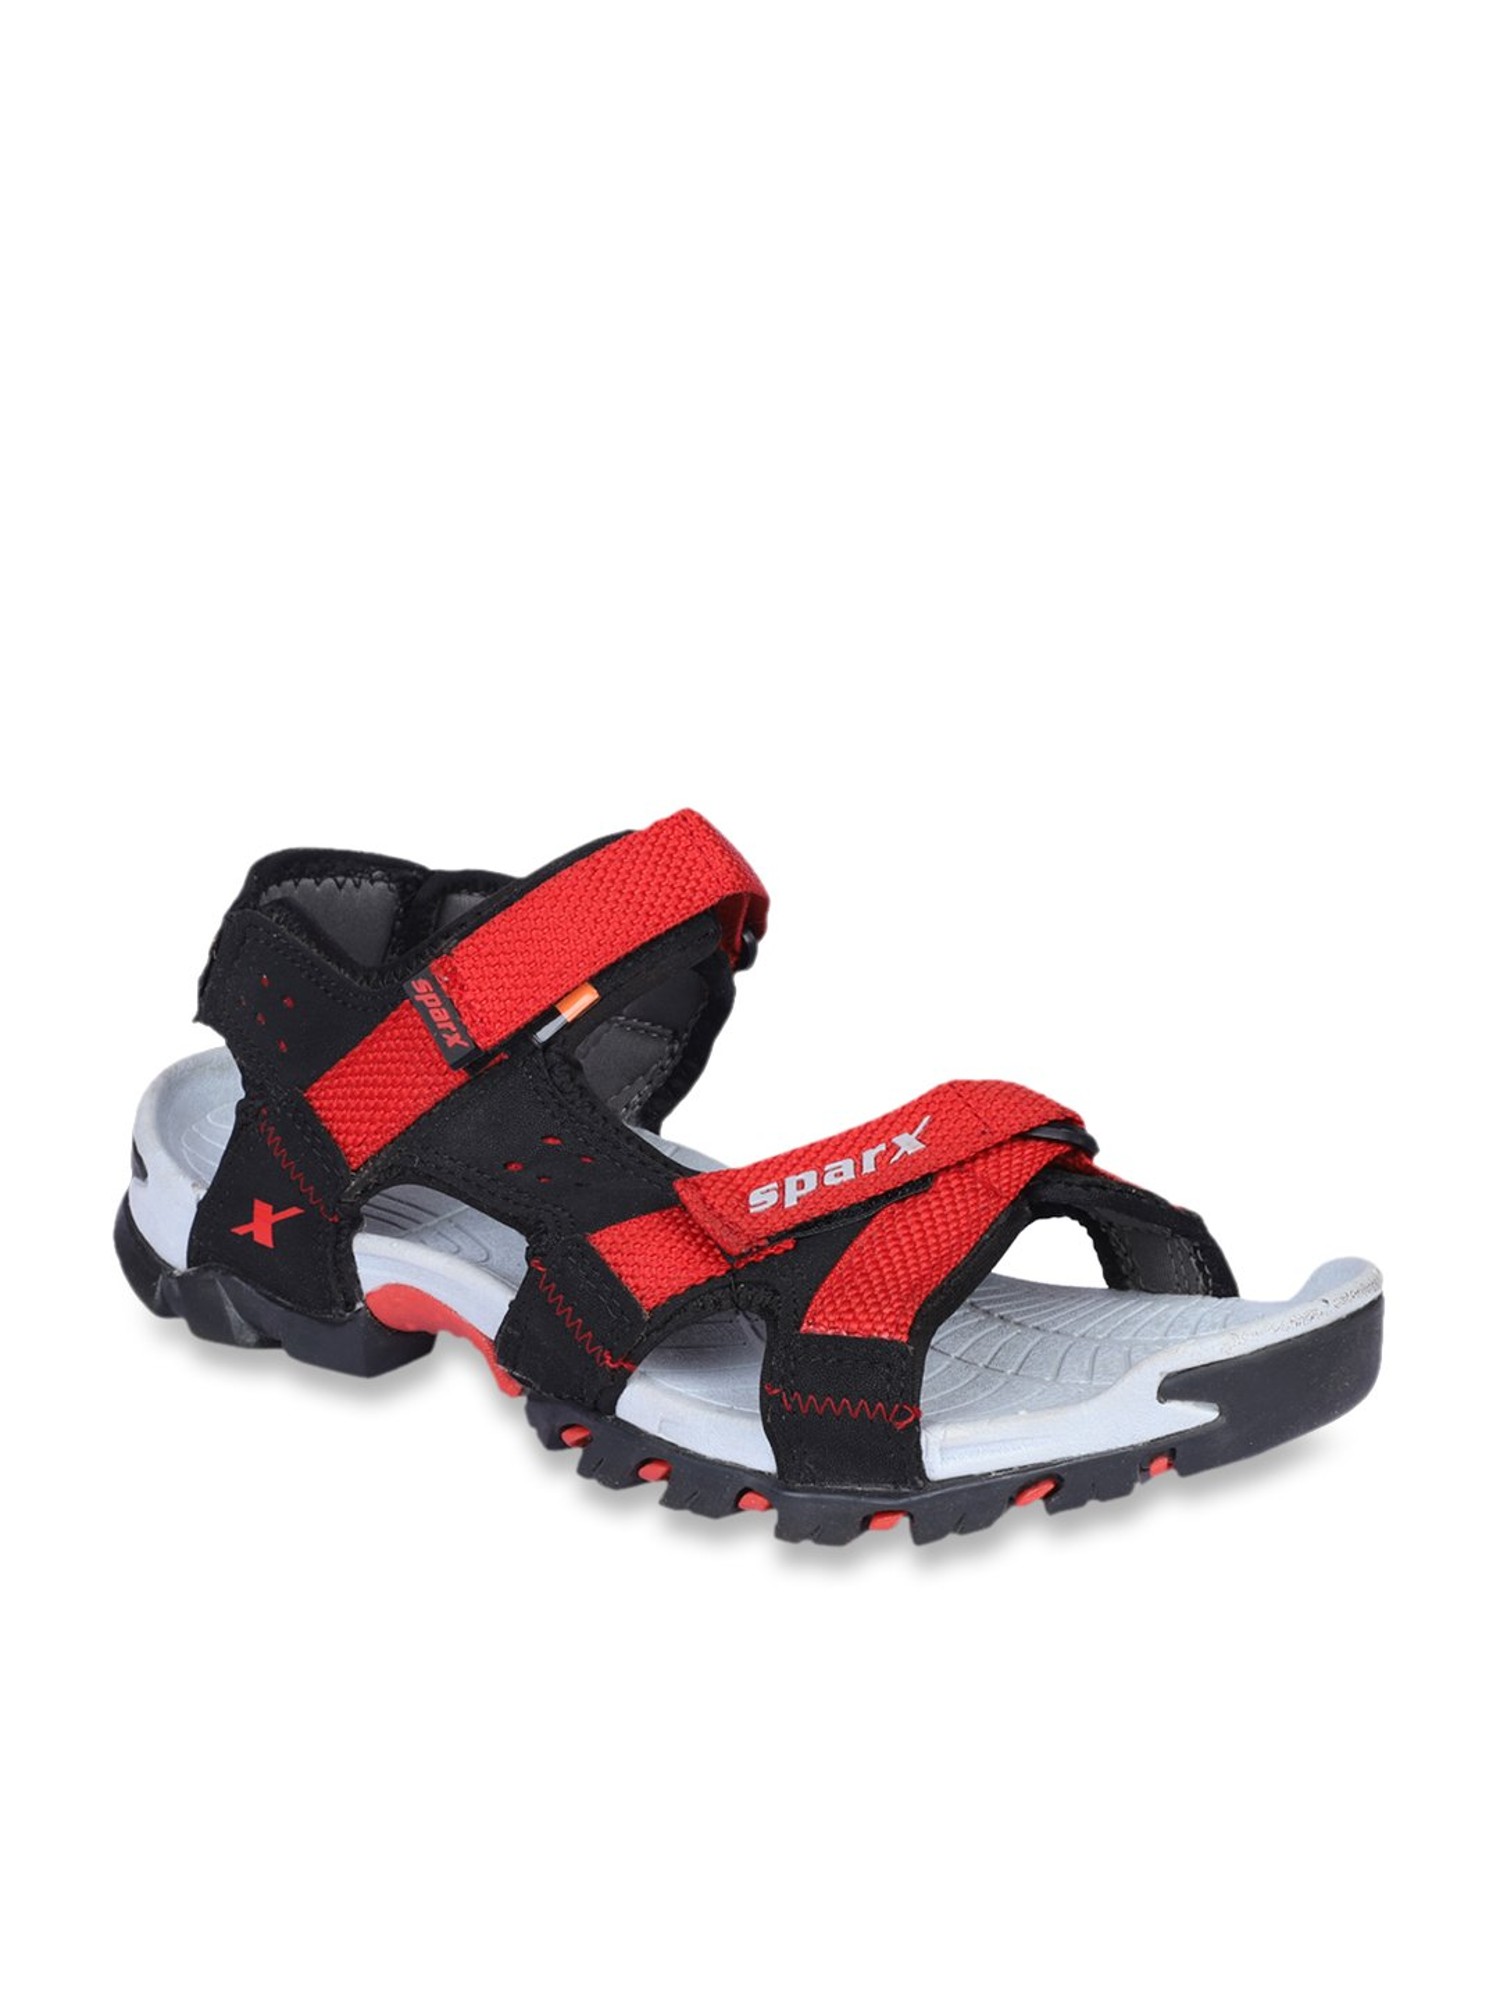 Sparx Men Black Red Sandals at Rs 1149/pair | Sparx Mens Sandals in Delhi |  ID: 13213033188